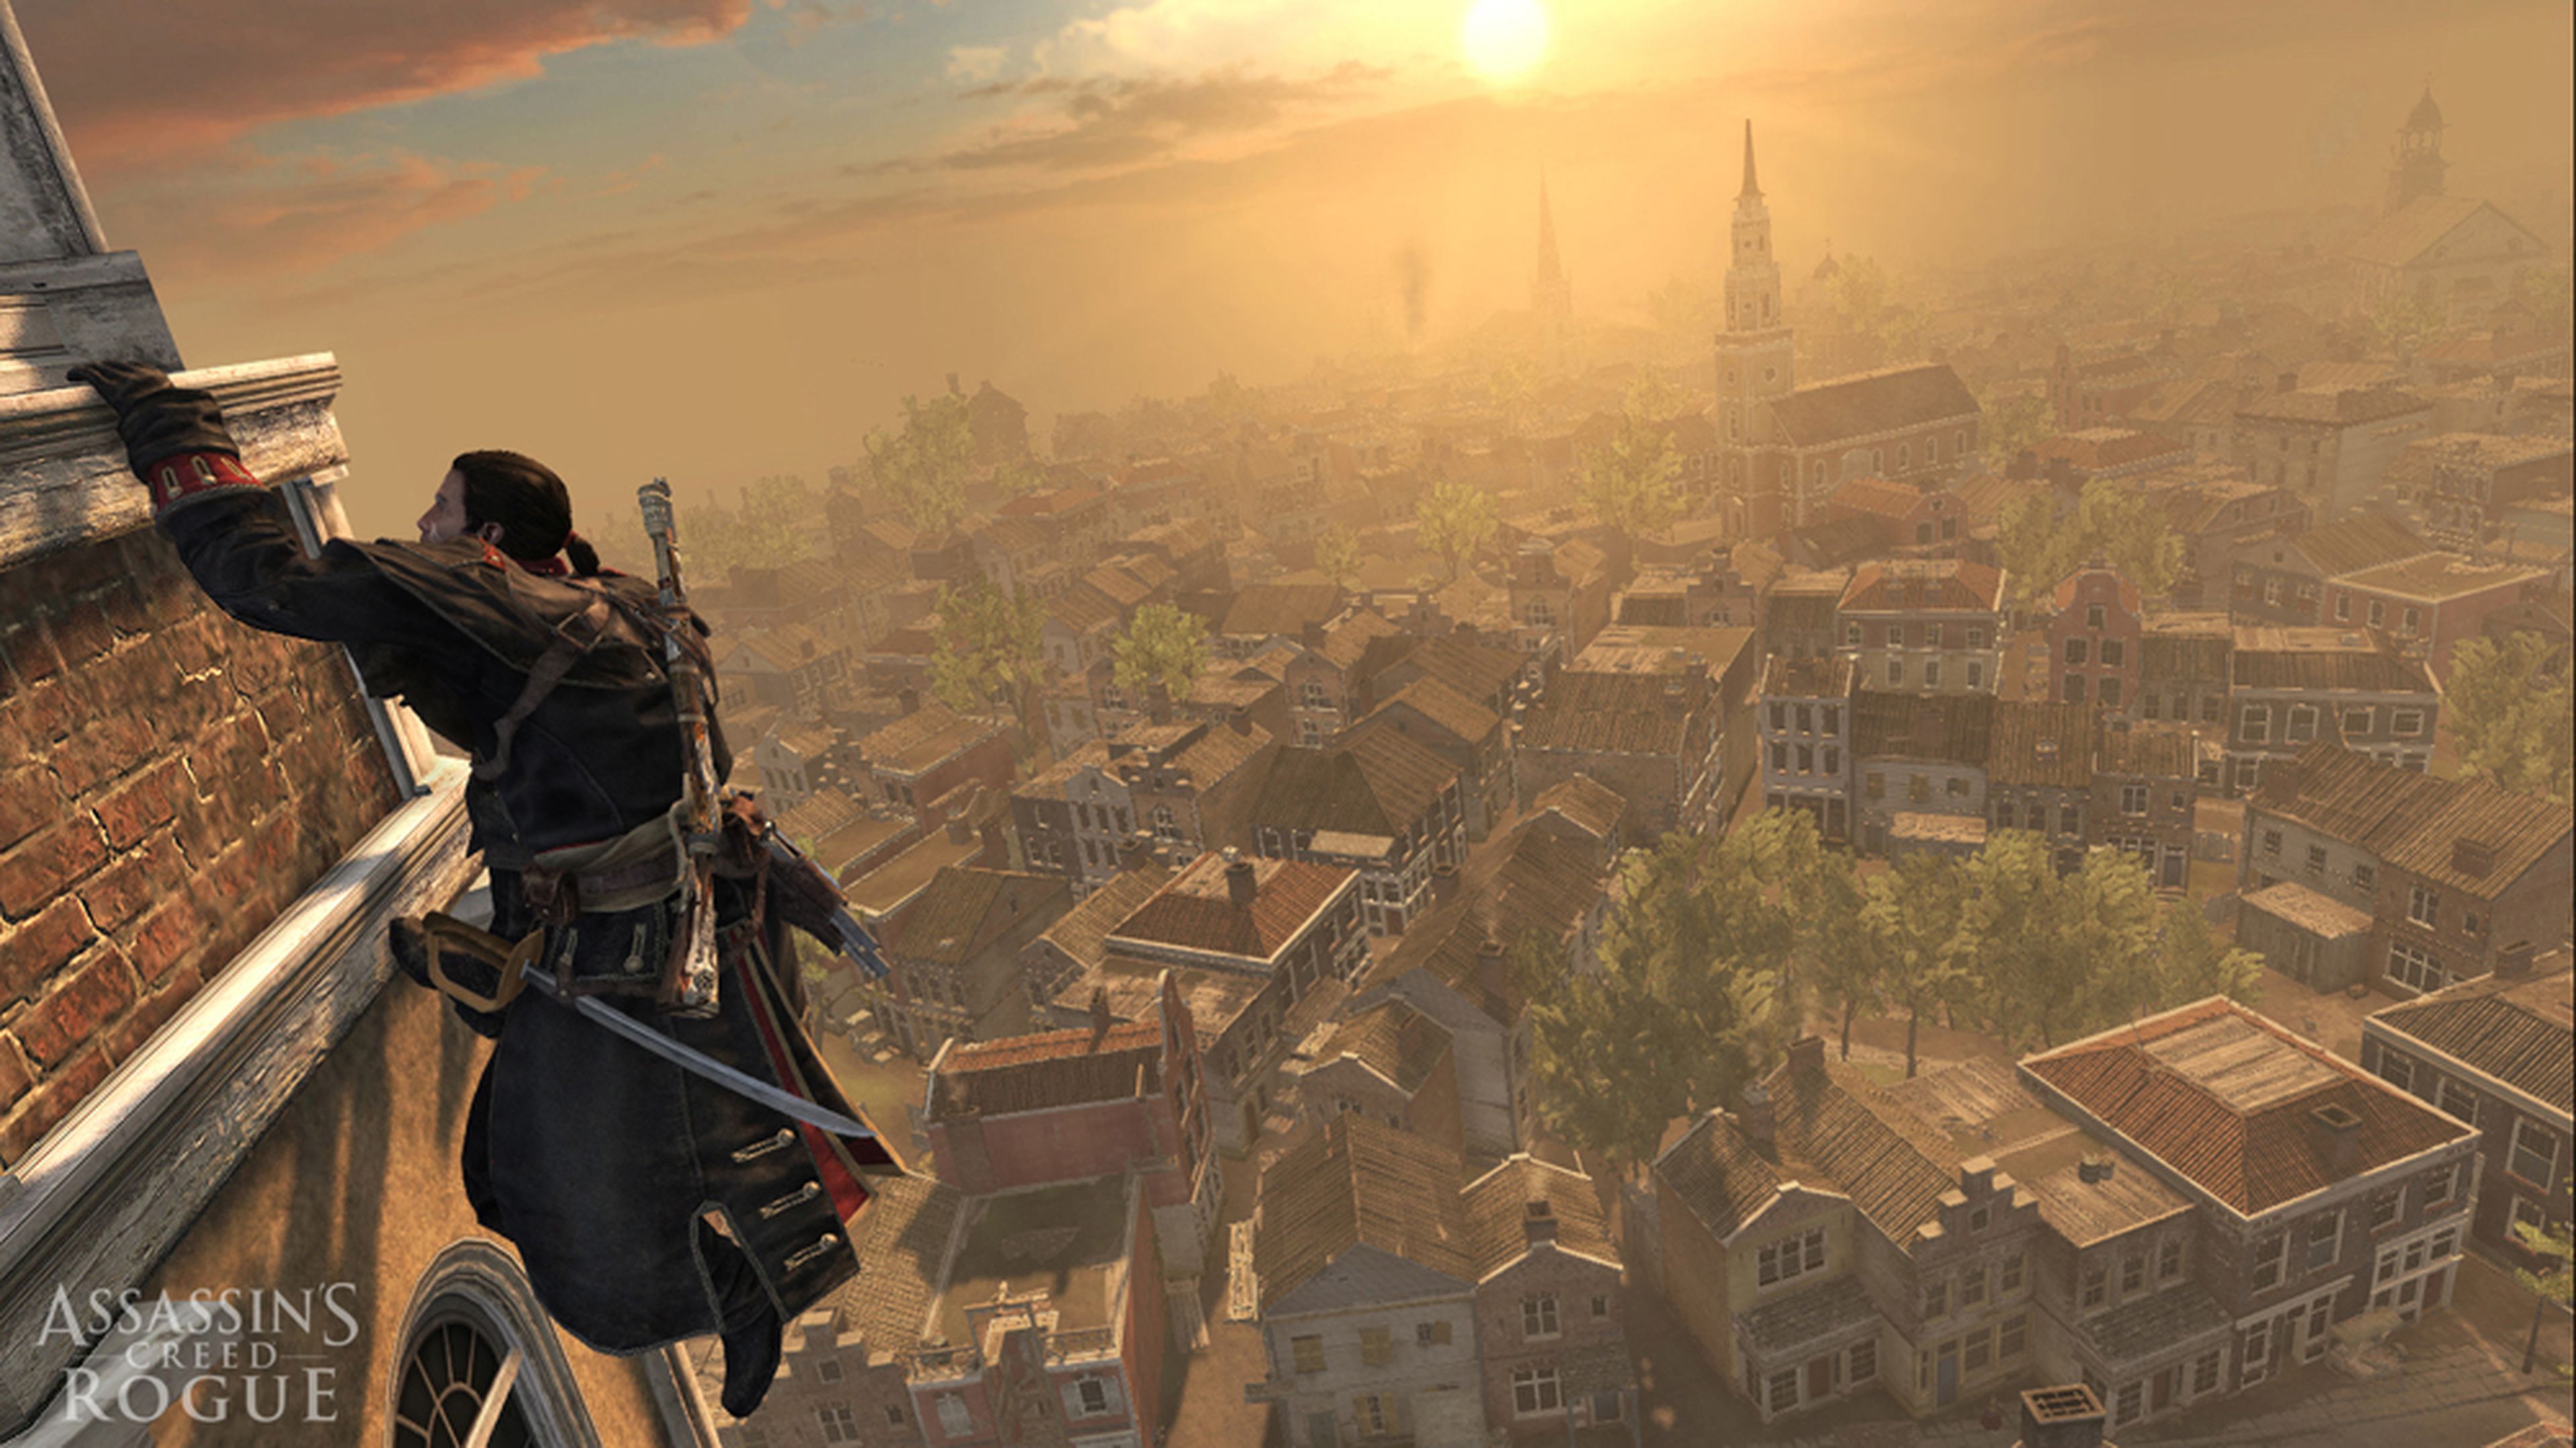 Avance: Ya hemos jugado a Assassin's Creed Rogue